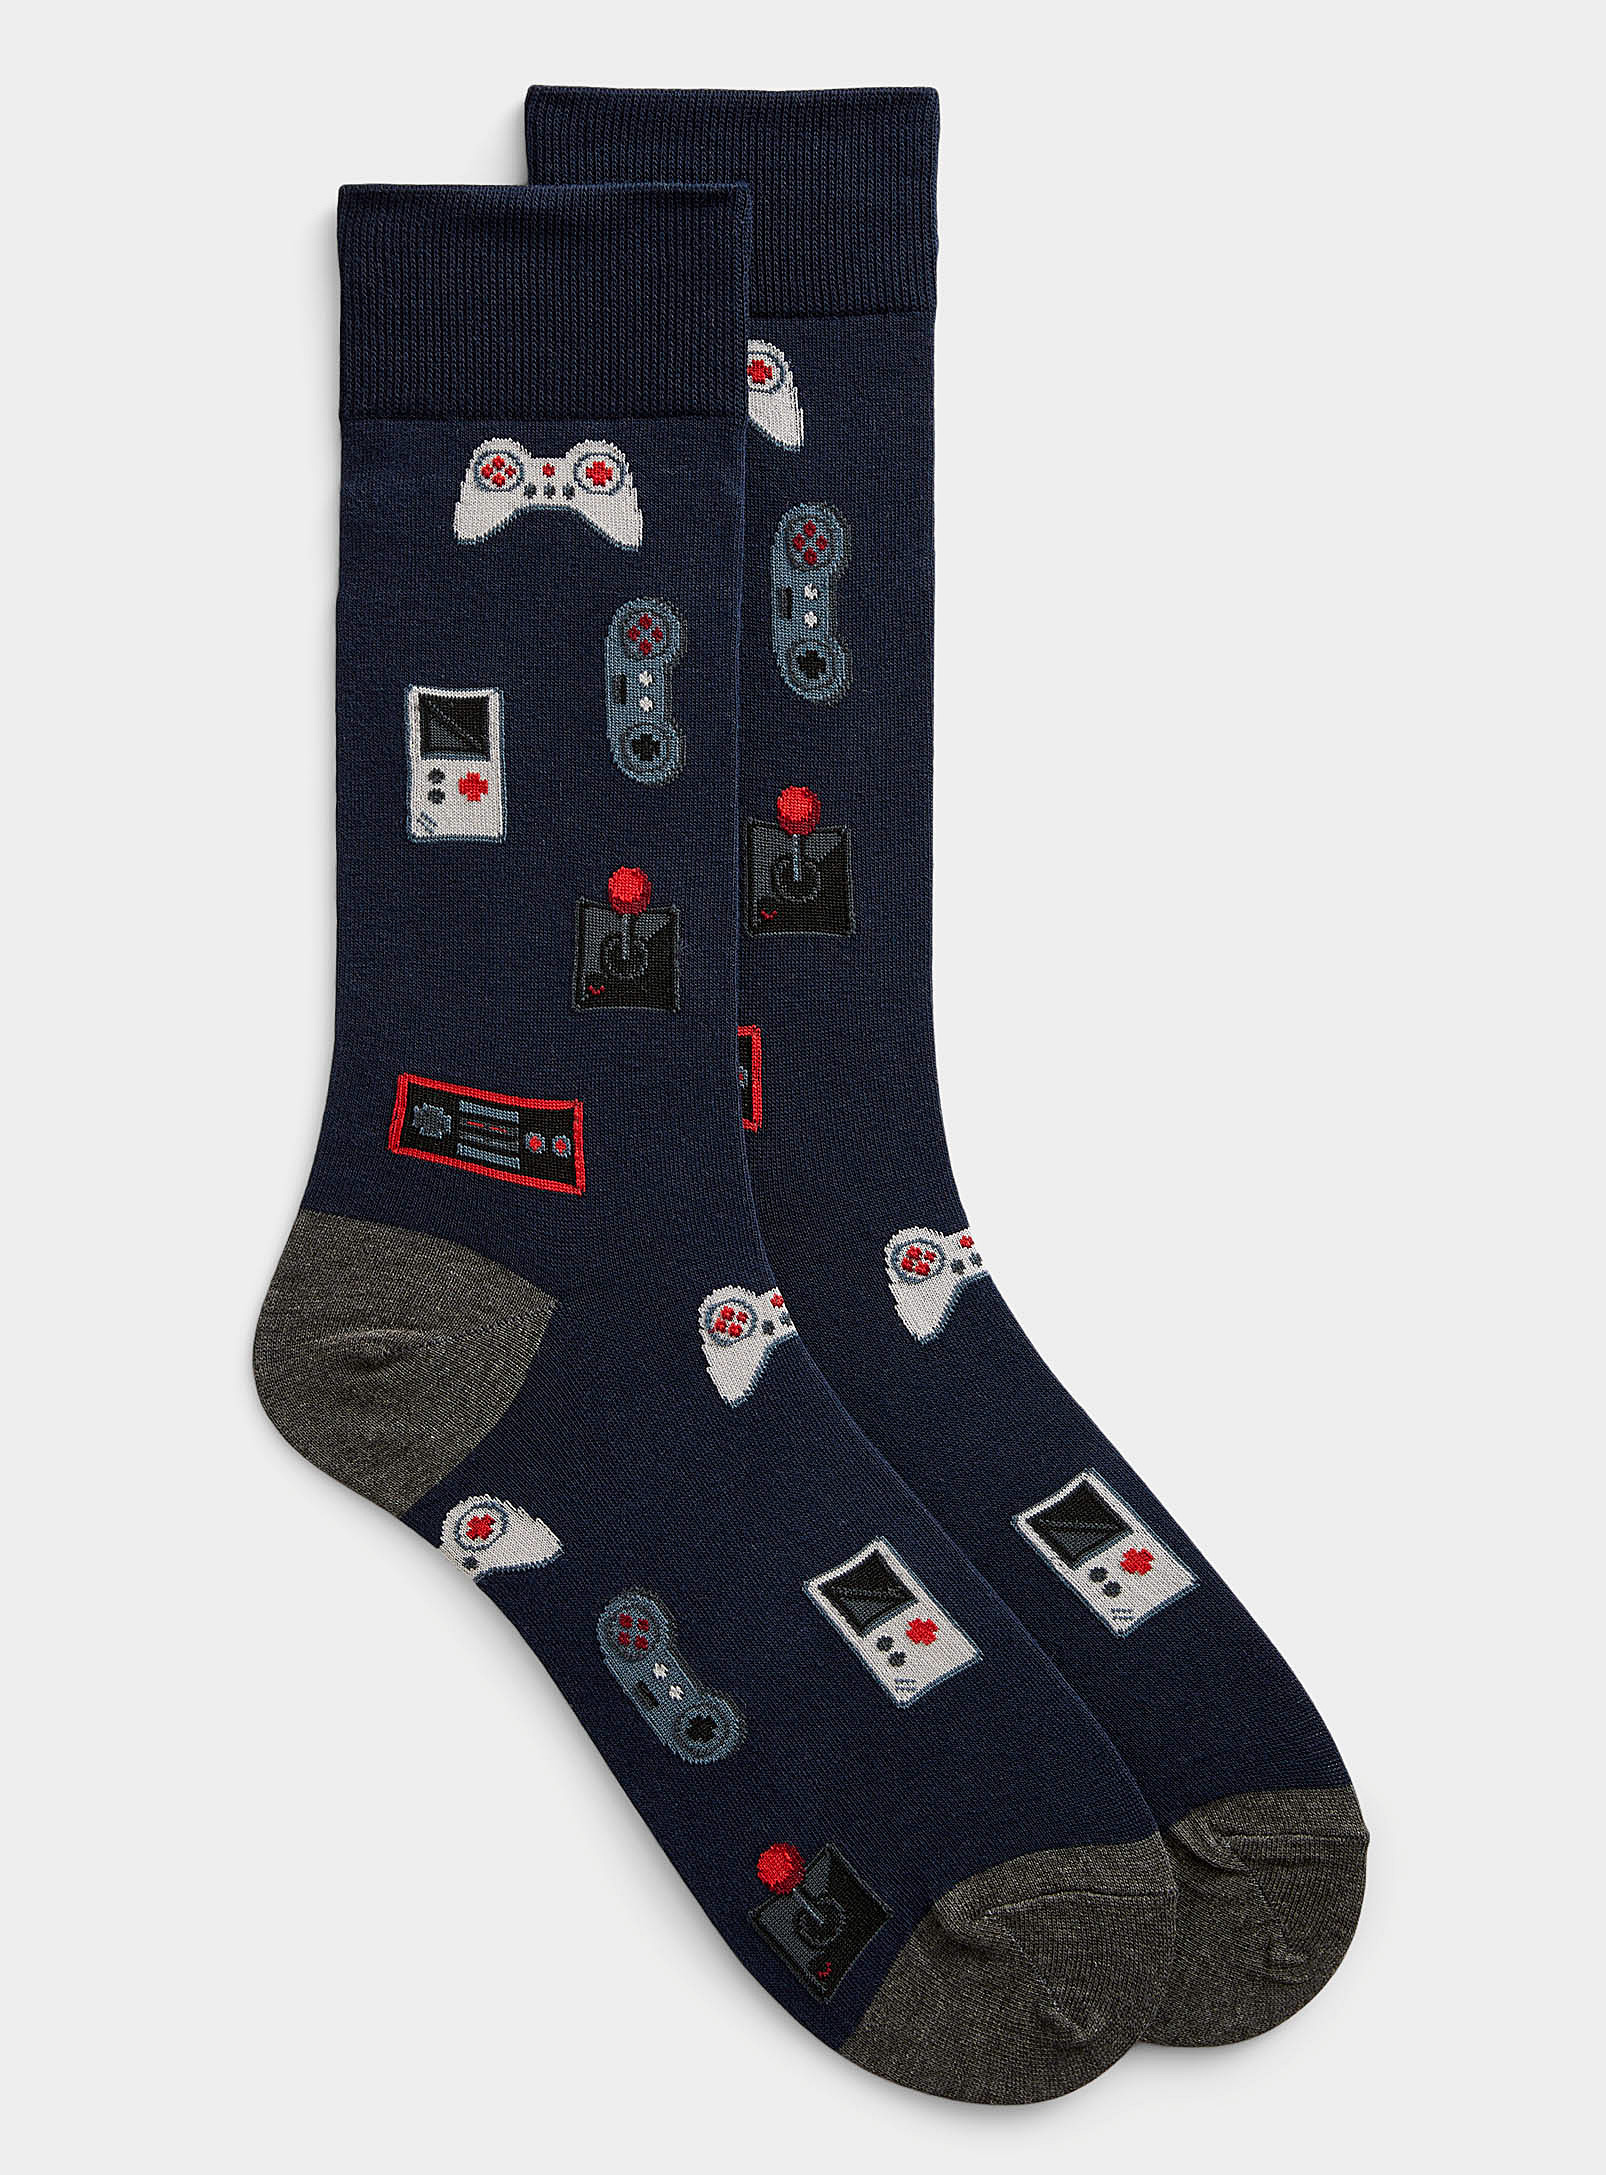 Hot Sox - Men's Video game sock